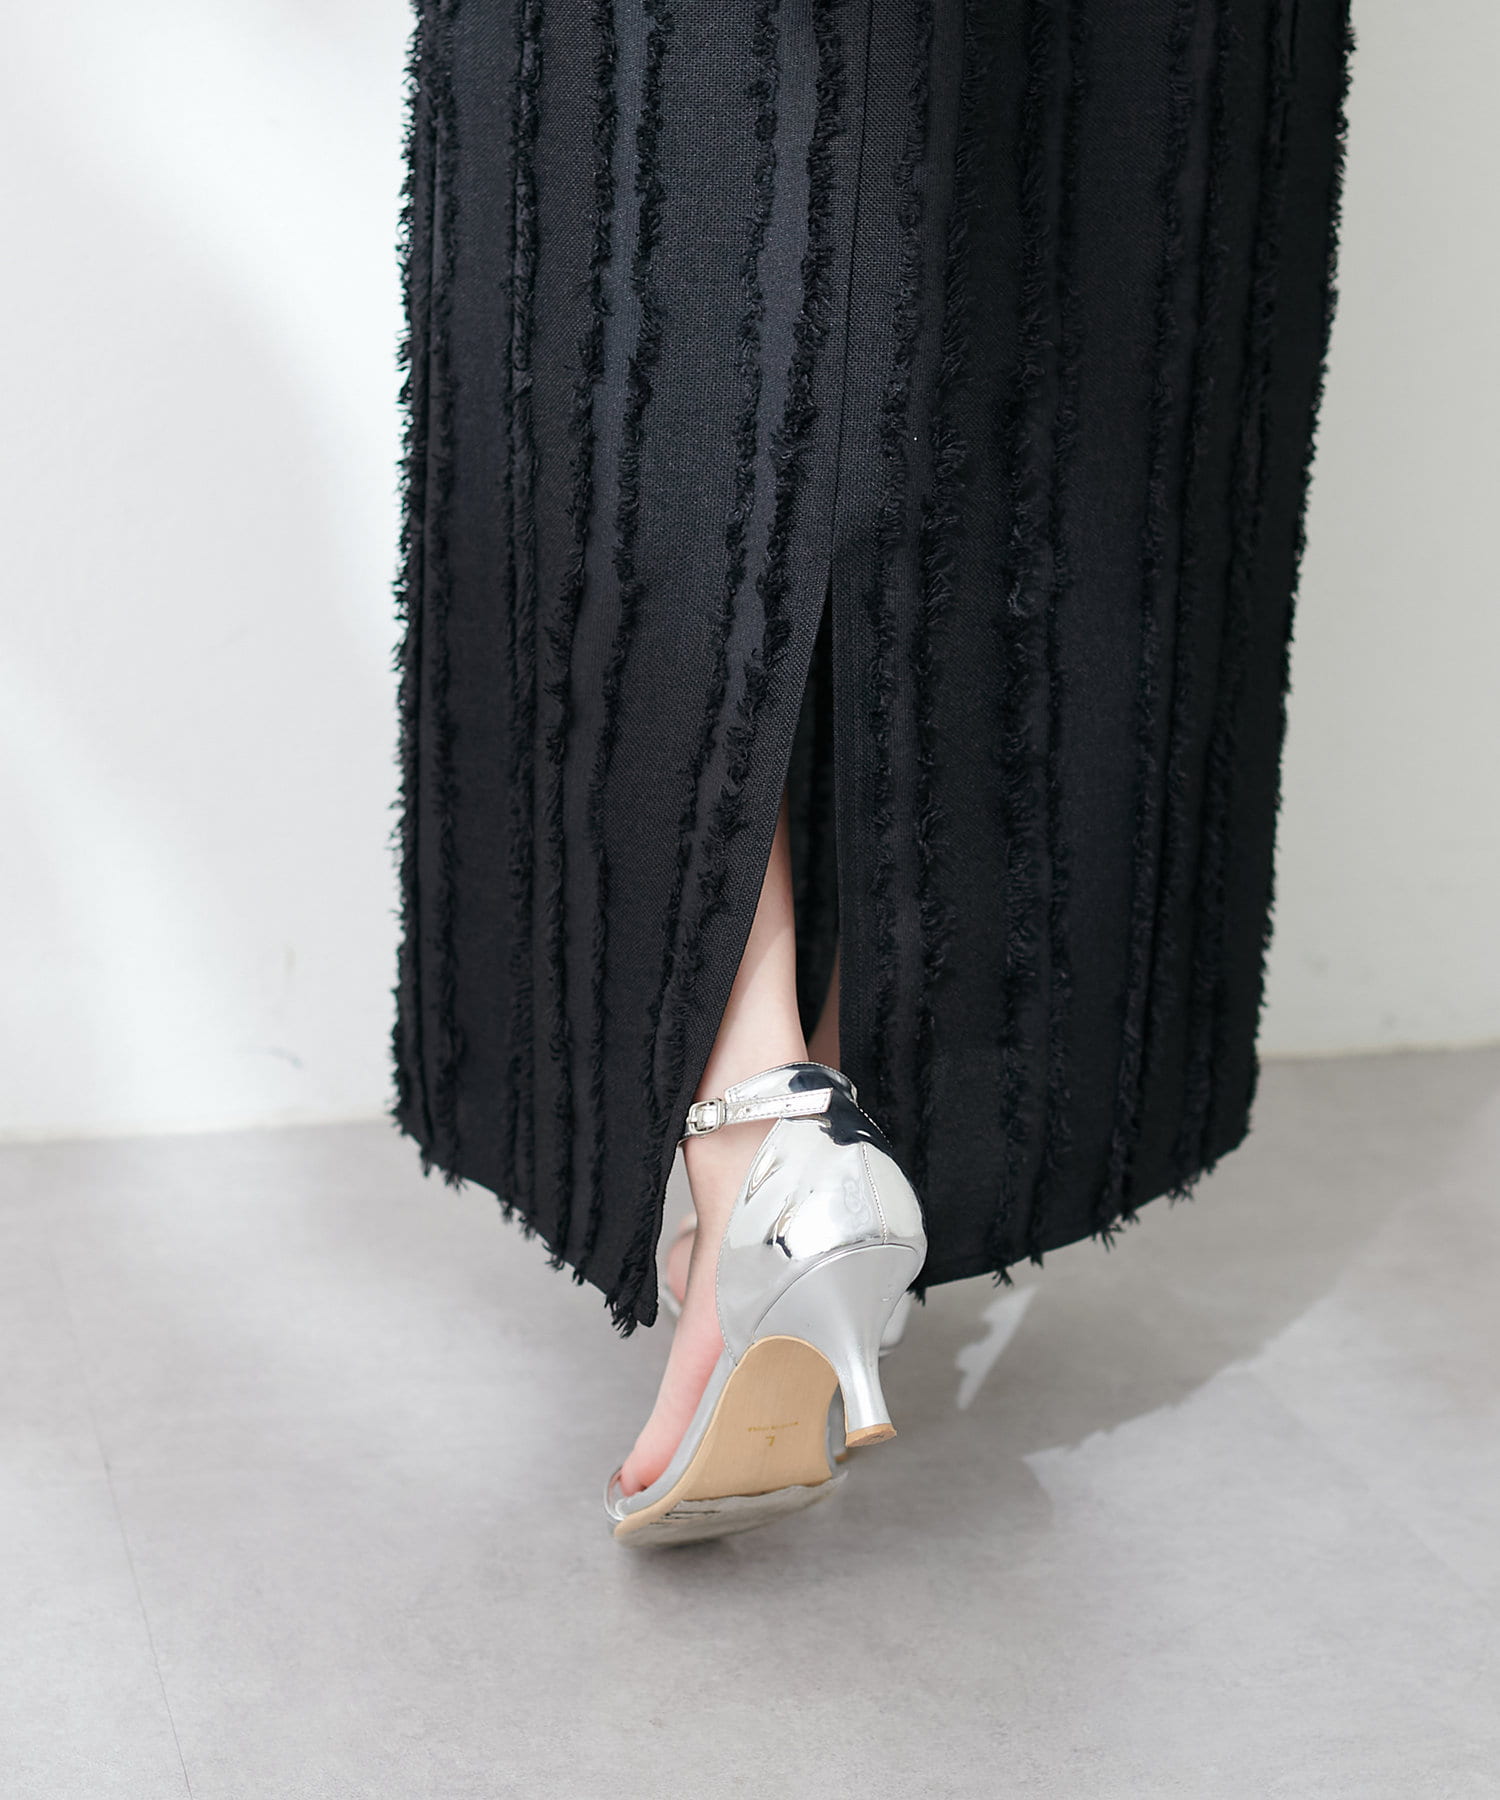 natural couture(ナチュラルクチュール) フリンジストライプAラインスカート